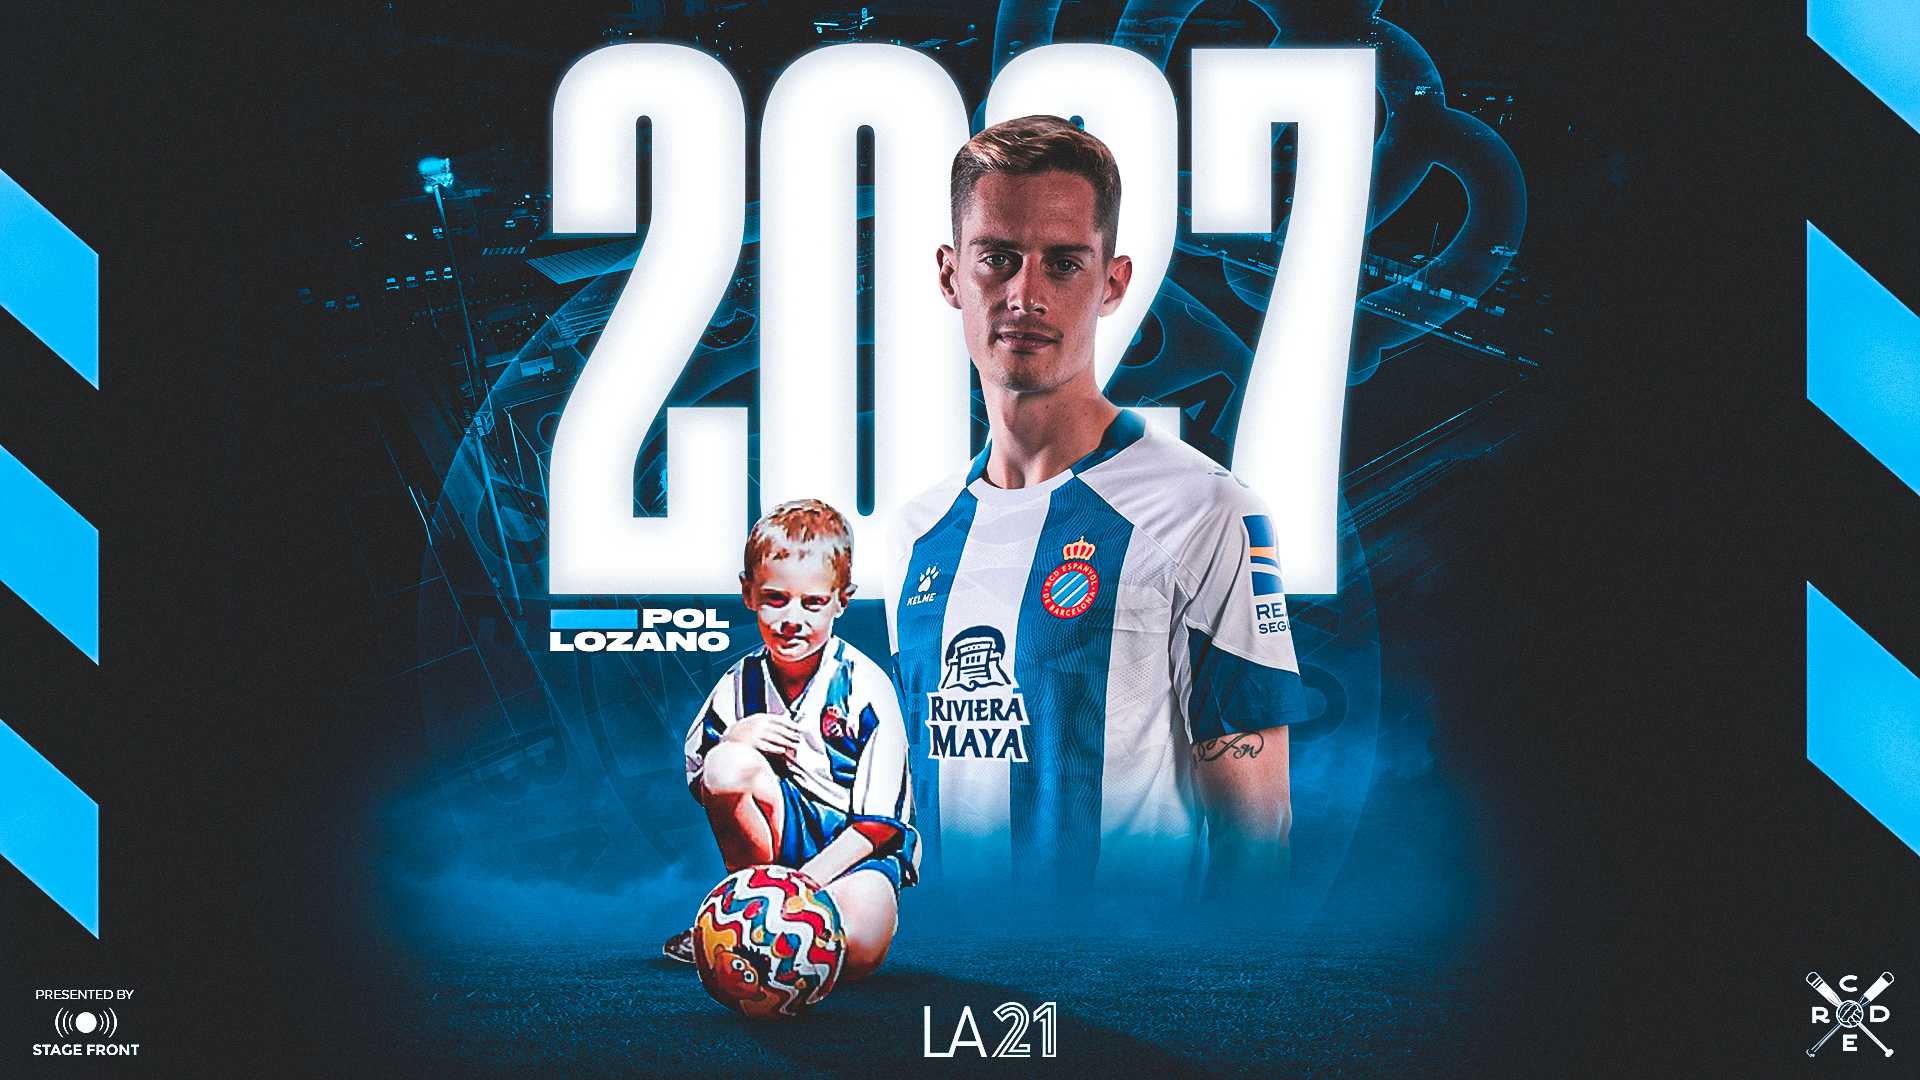 Pol Lozano renews through to 2027